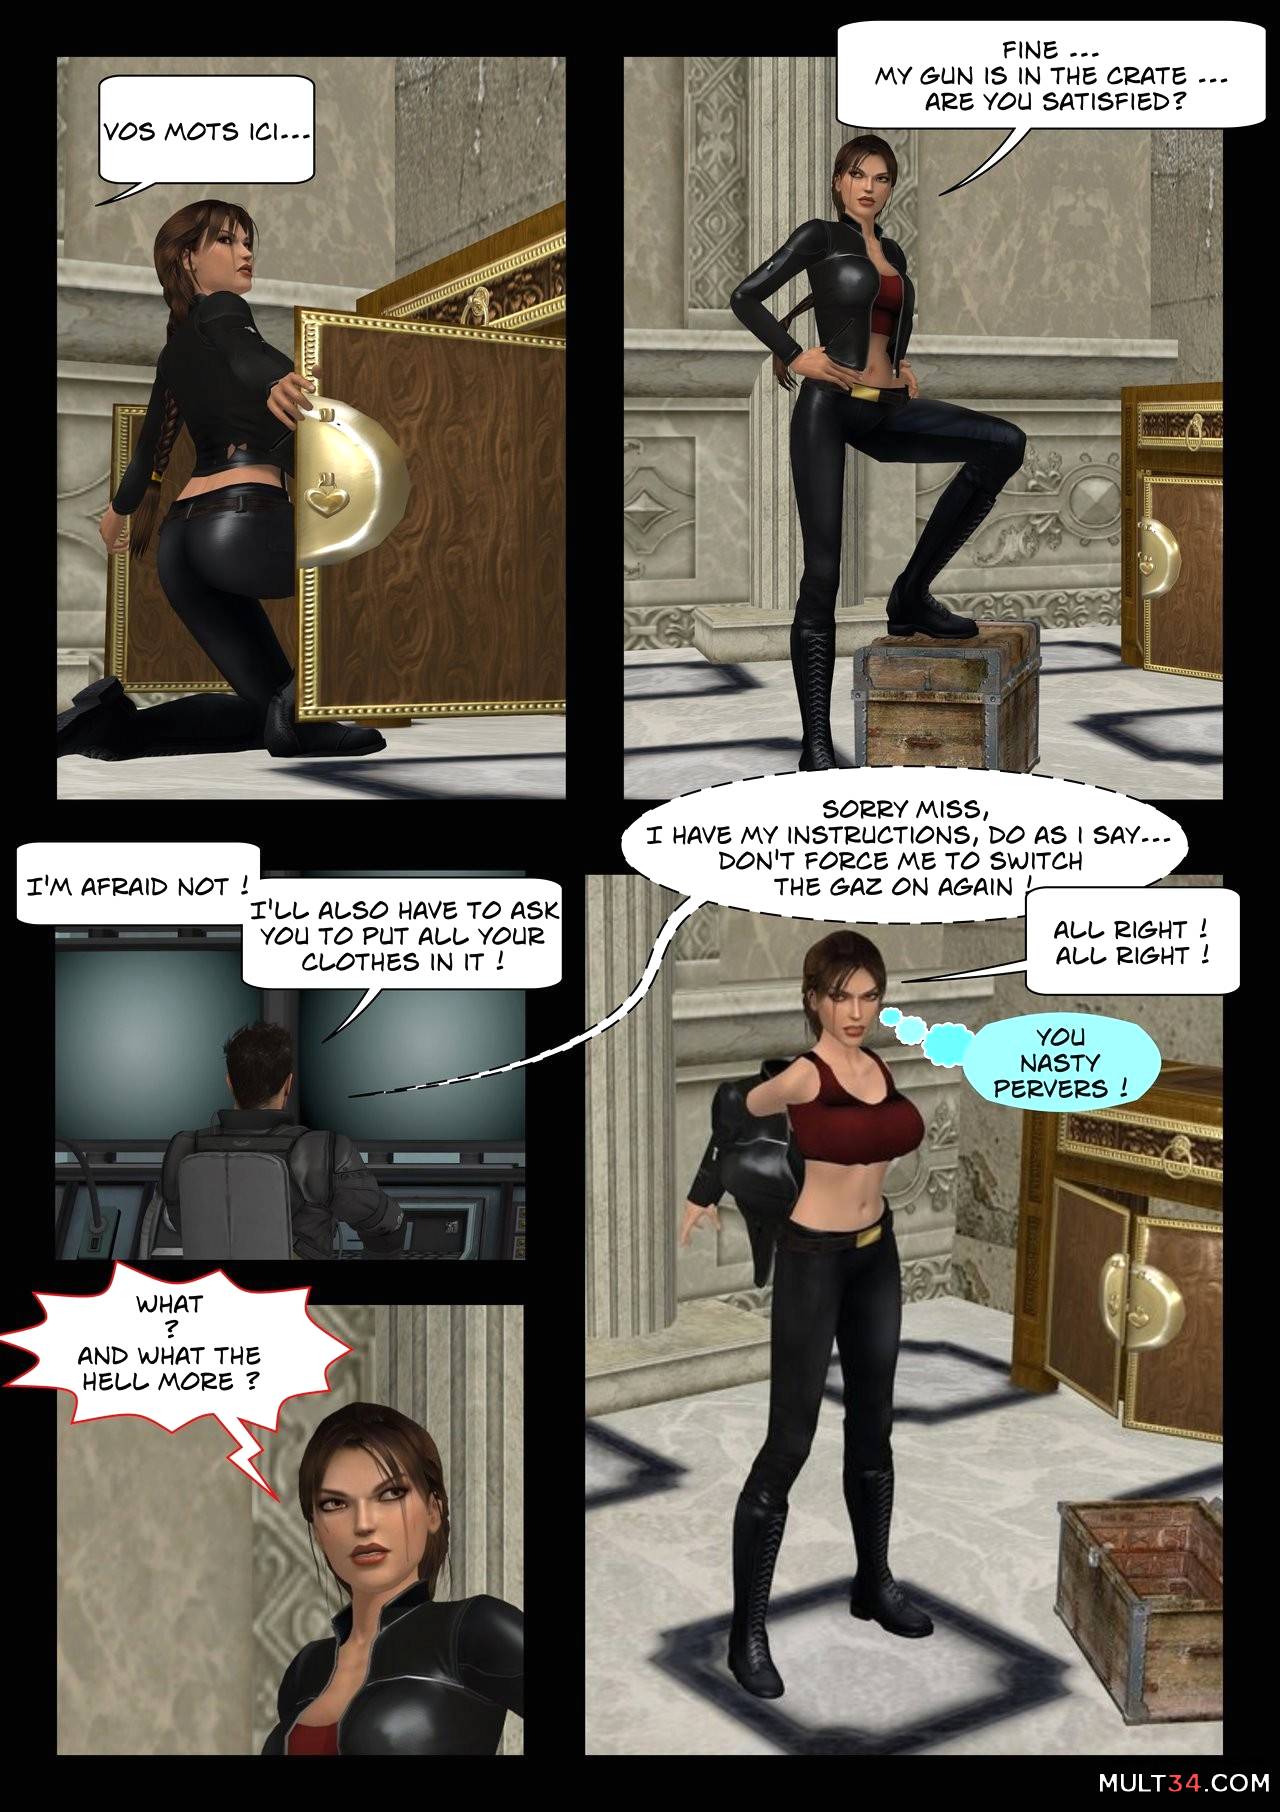 Tomb Raider Domination -The Misadventures of Lara Croft - chapter 1 page 12